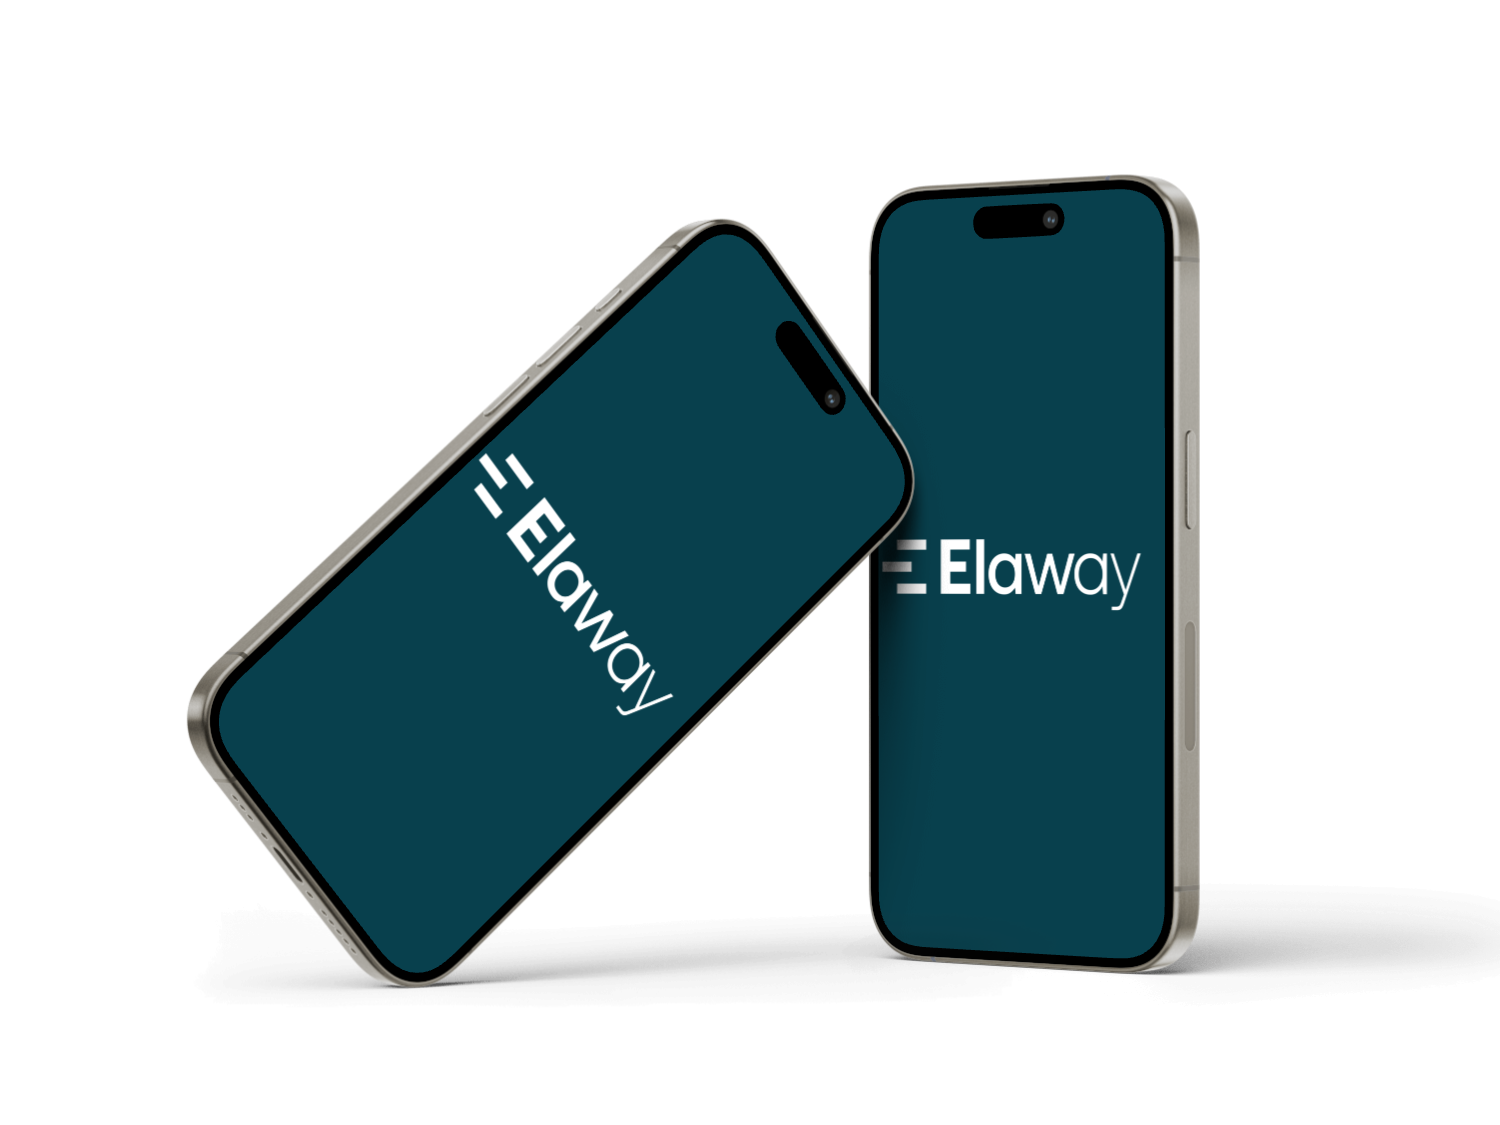 Iphone showing the Elaway logo